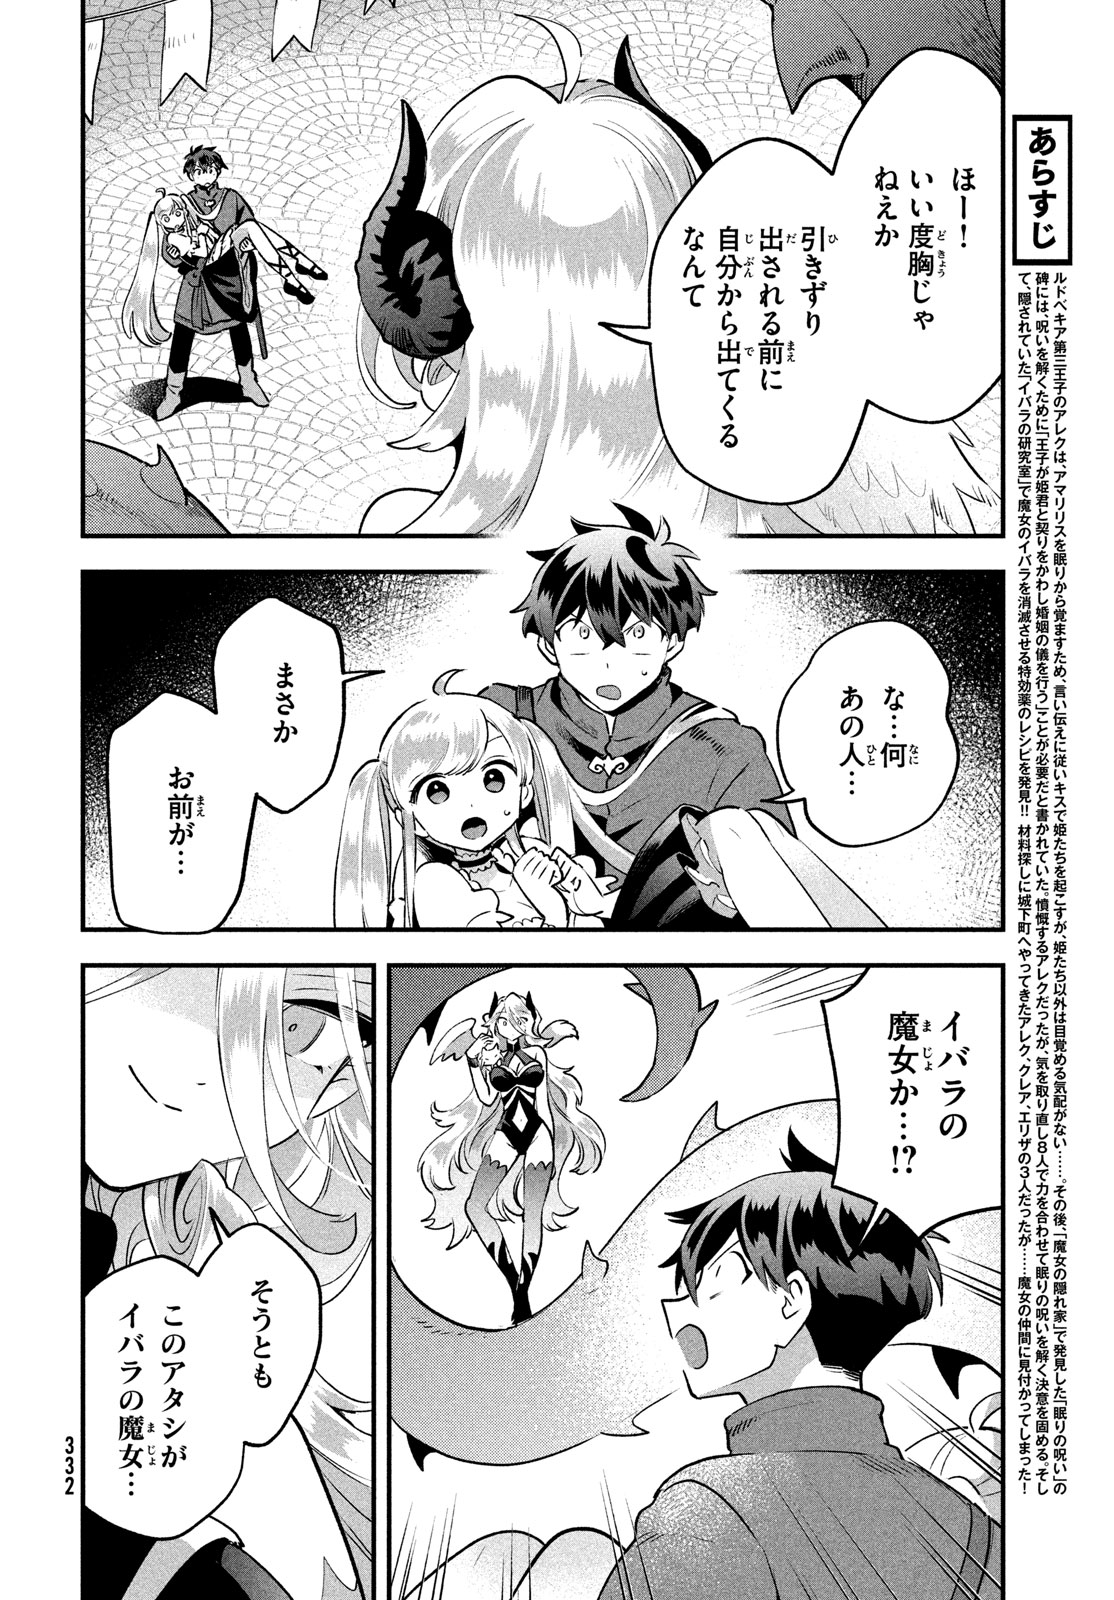 7-nin no Nemuri Hime - Chapter 43 - Page 6